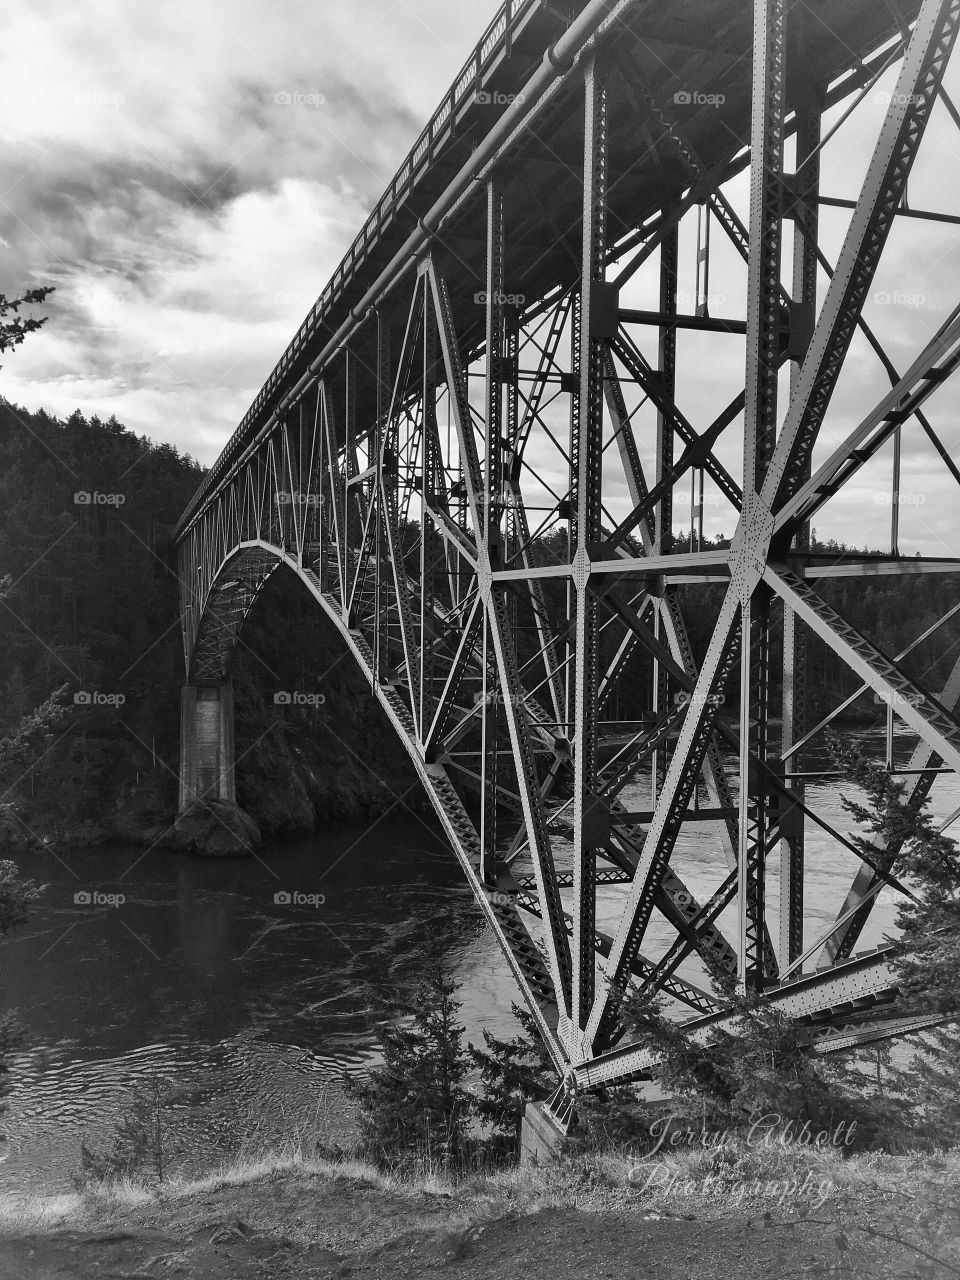 Deception Pass Bridge arched design in black and white